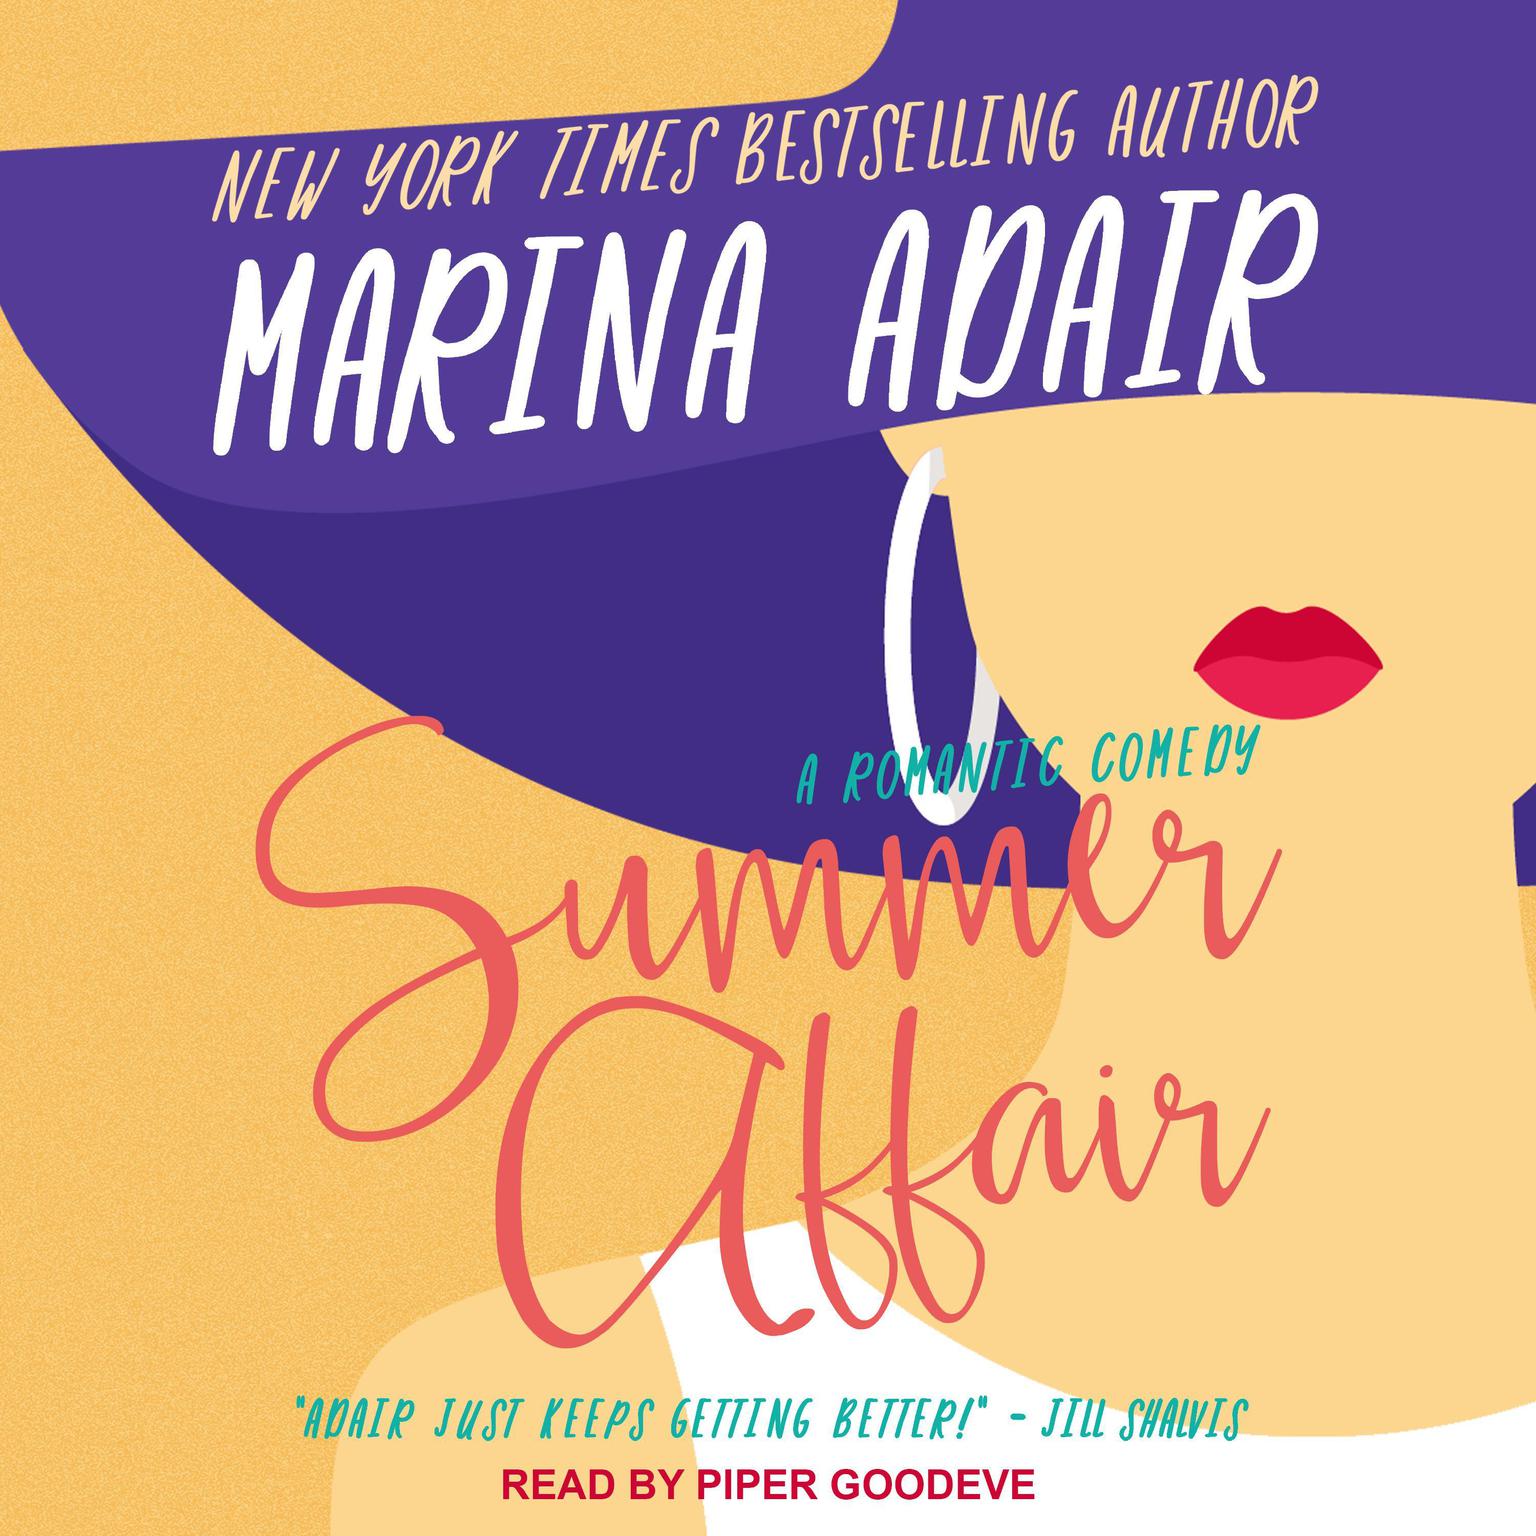 Summer Affair: A Romantic Comedy Audiobook, by Marina Adair